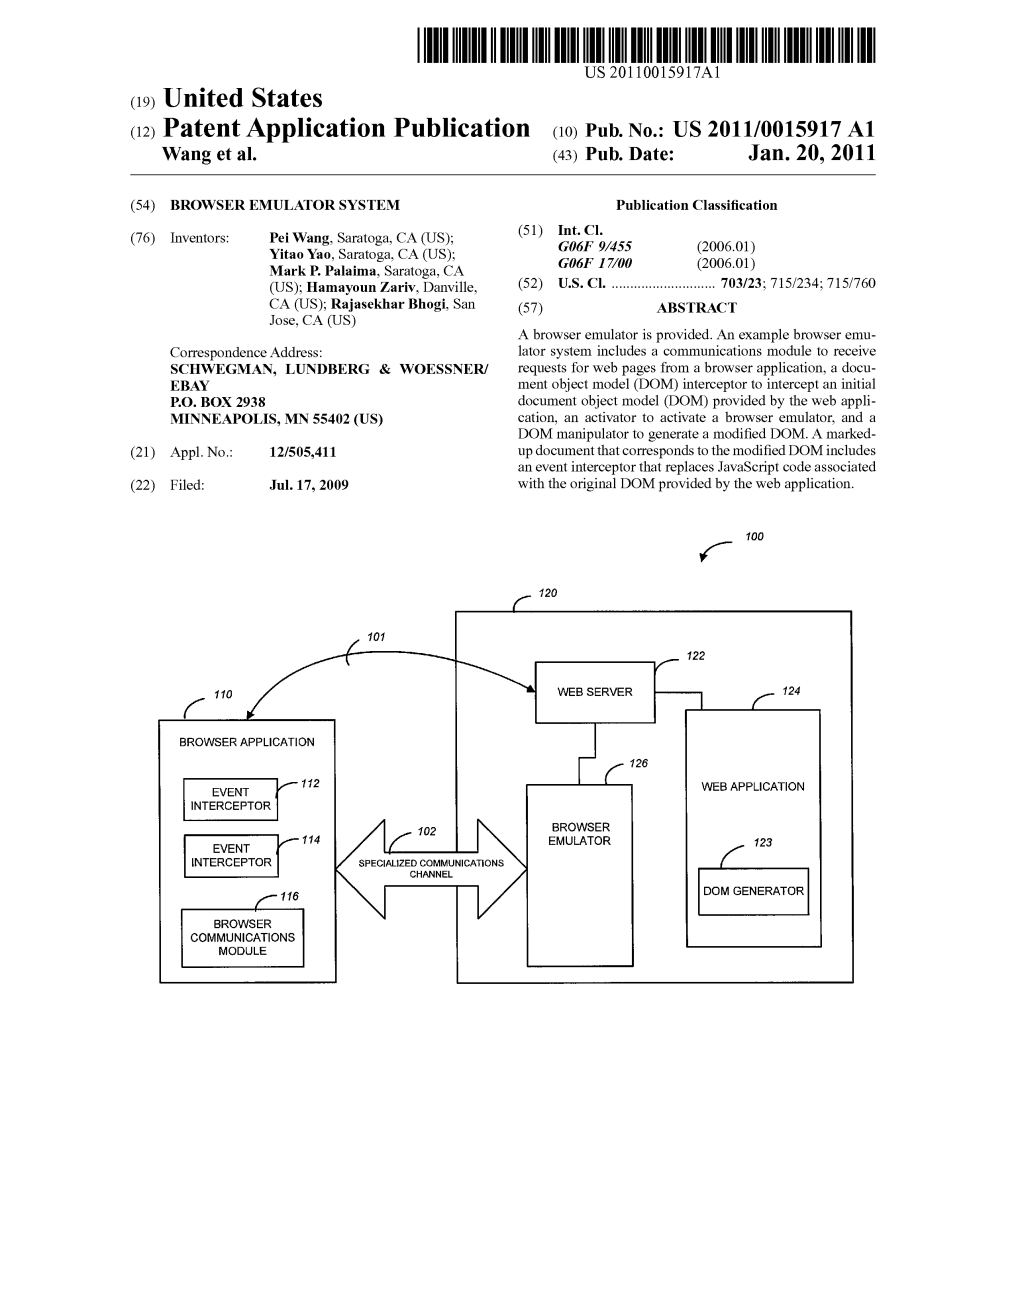 (12) Patent Application Publication (10) Pub. No.: US 2011/0015917 A1 Wang Et Al